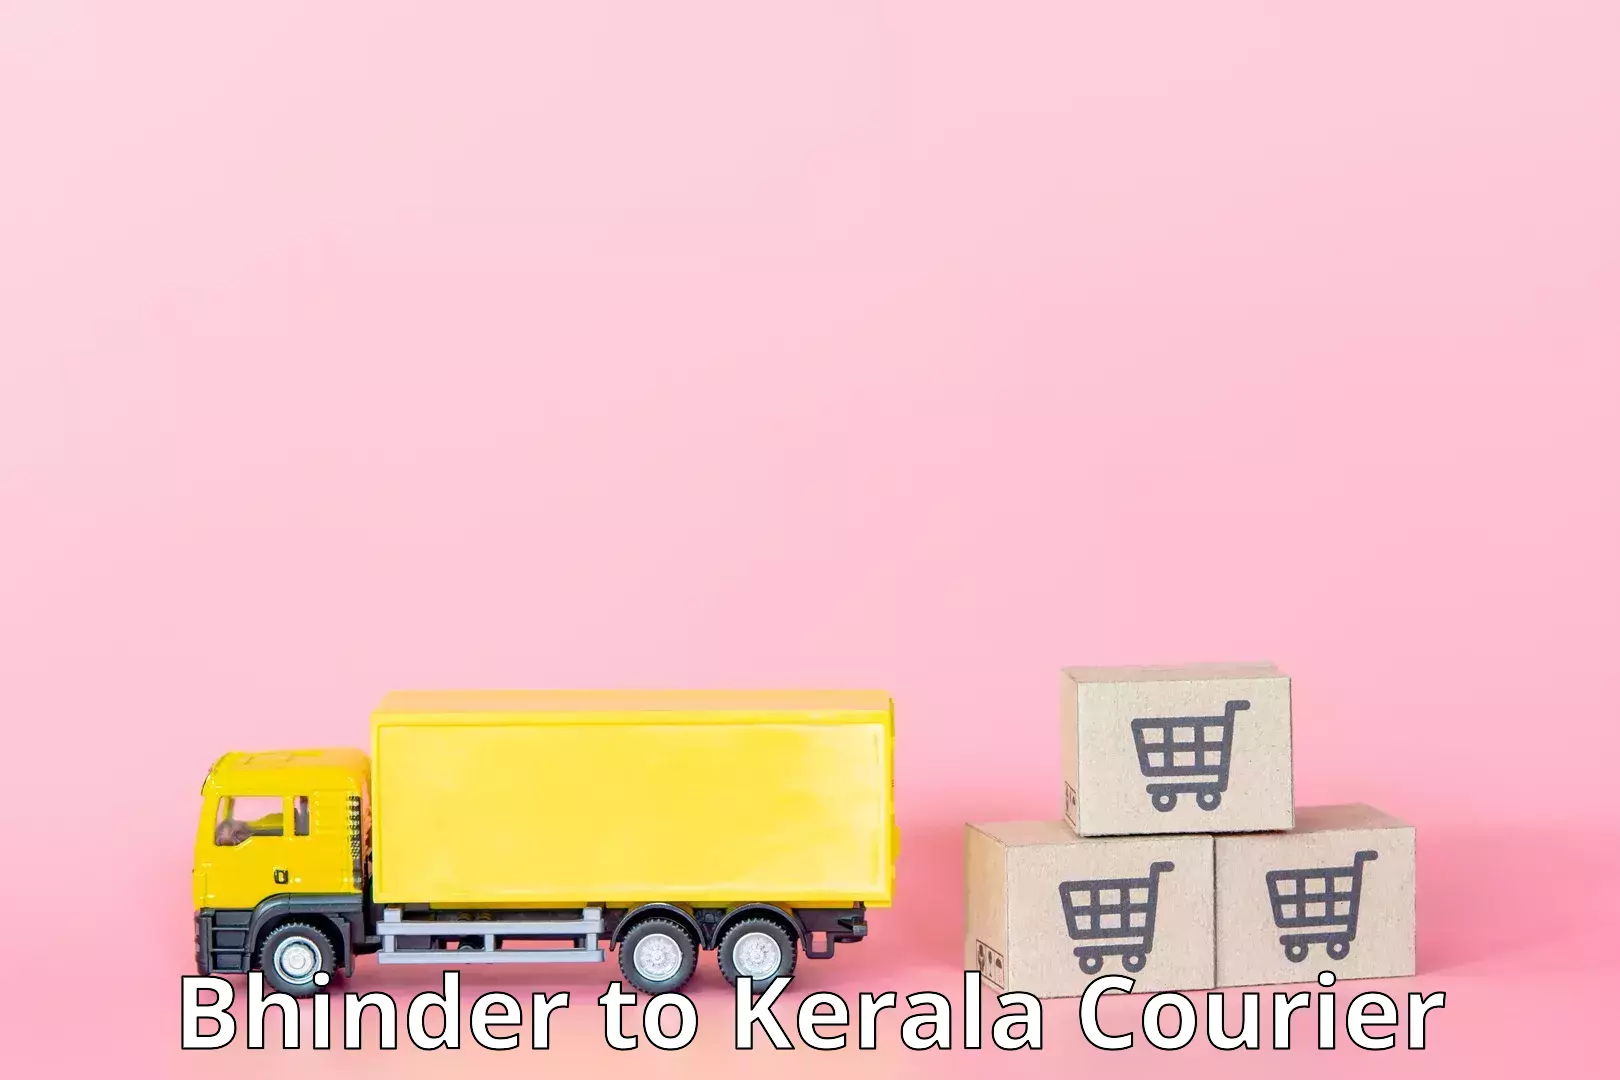 Urban courier service Bhinder to Kerala